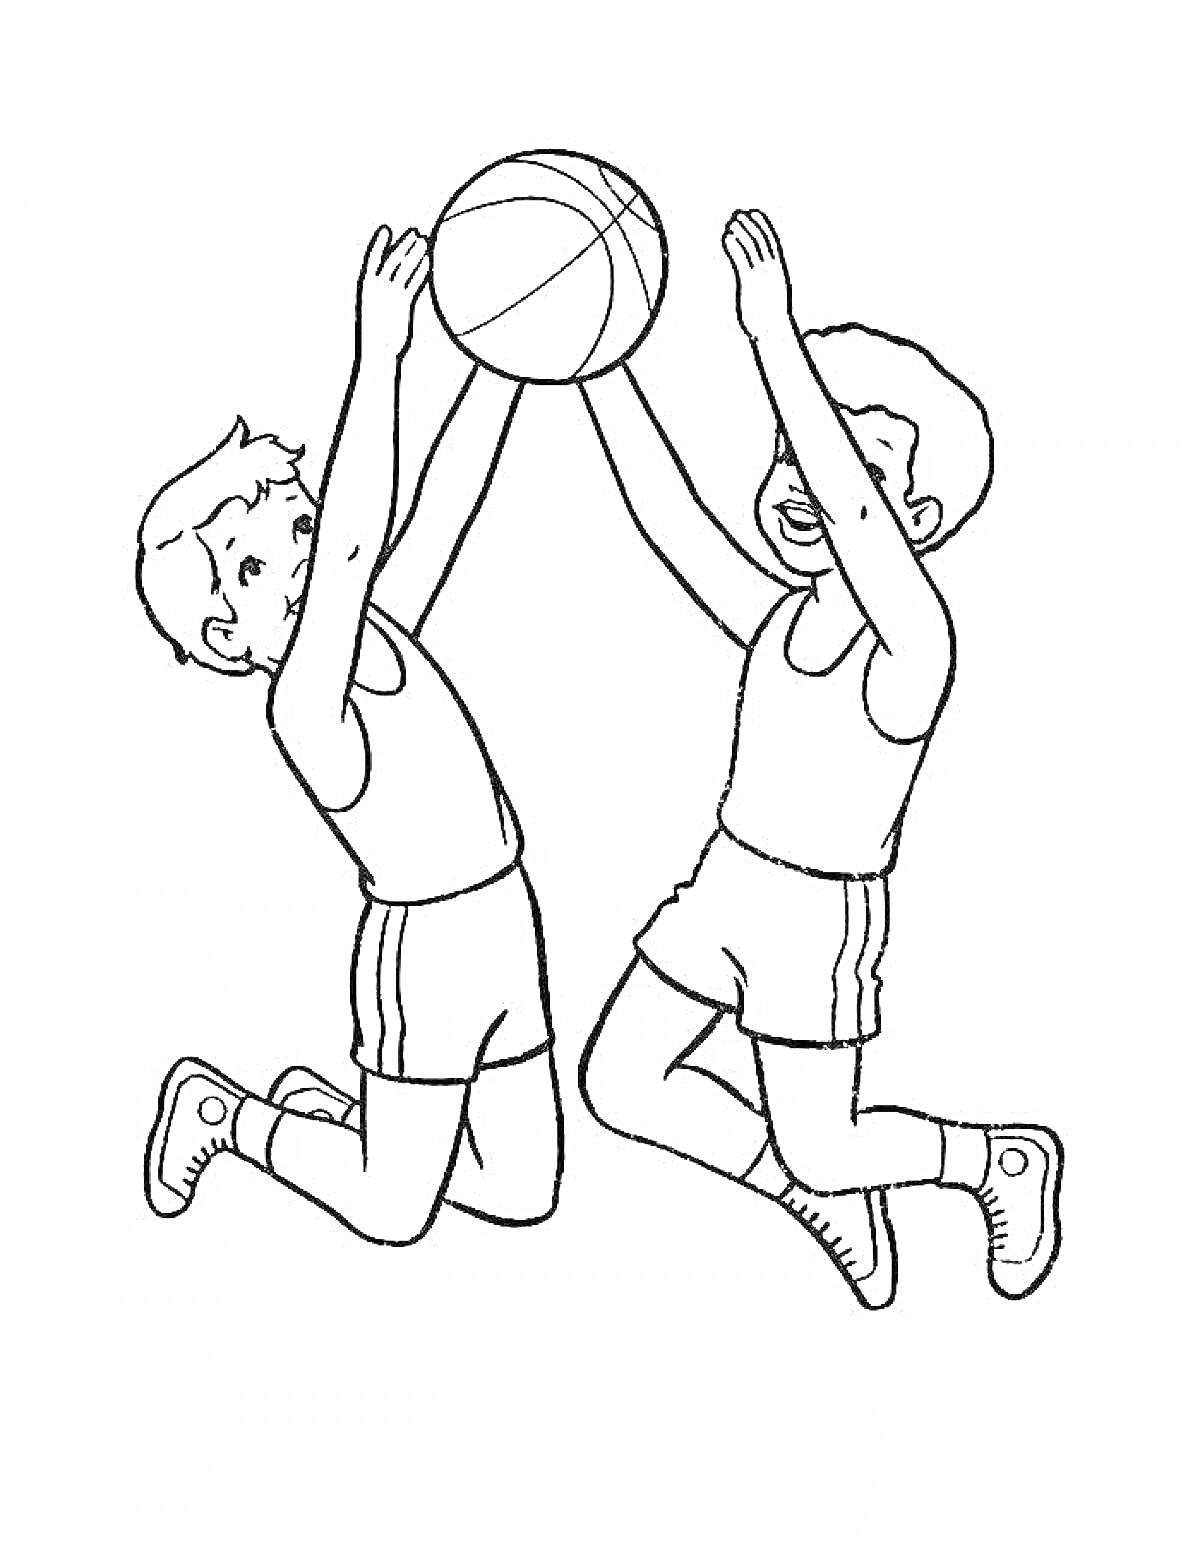 На раскраске изображено: Спорт, Физкультура, Баскетбол, Игра, Спортивная форма